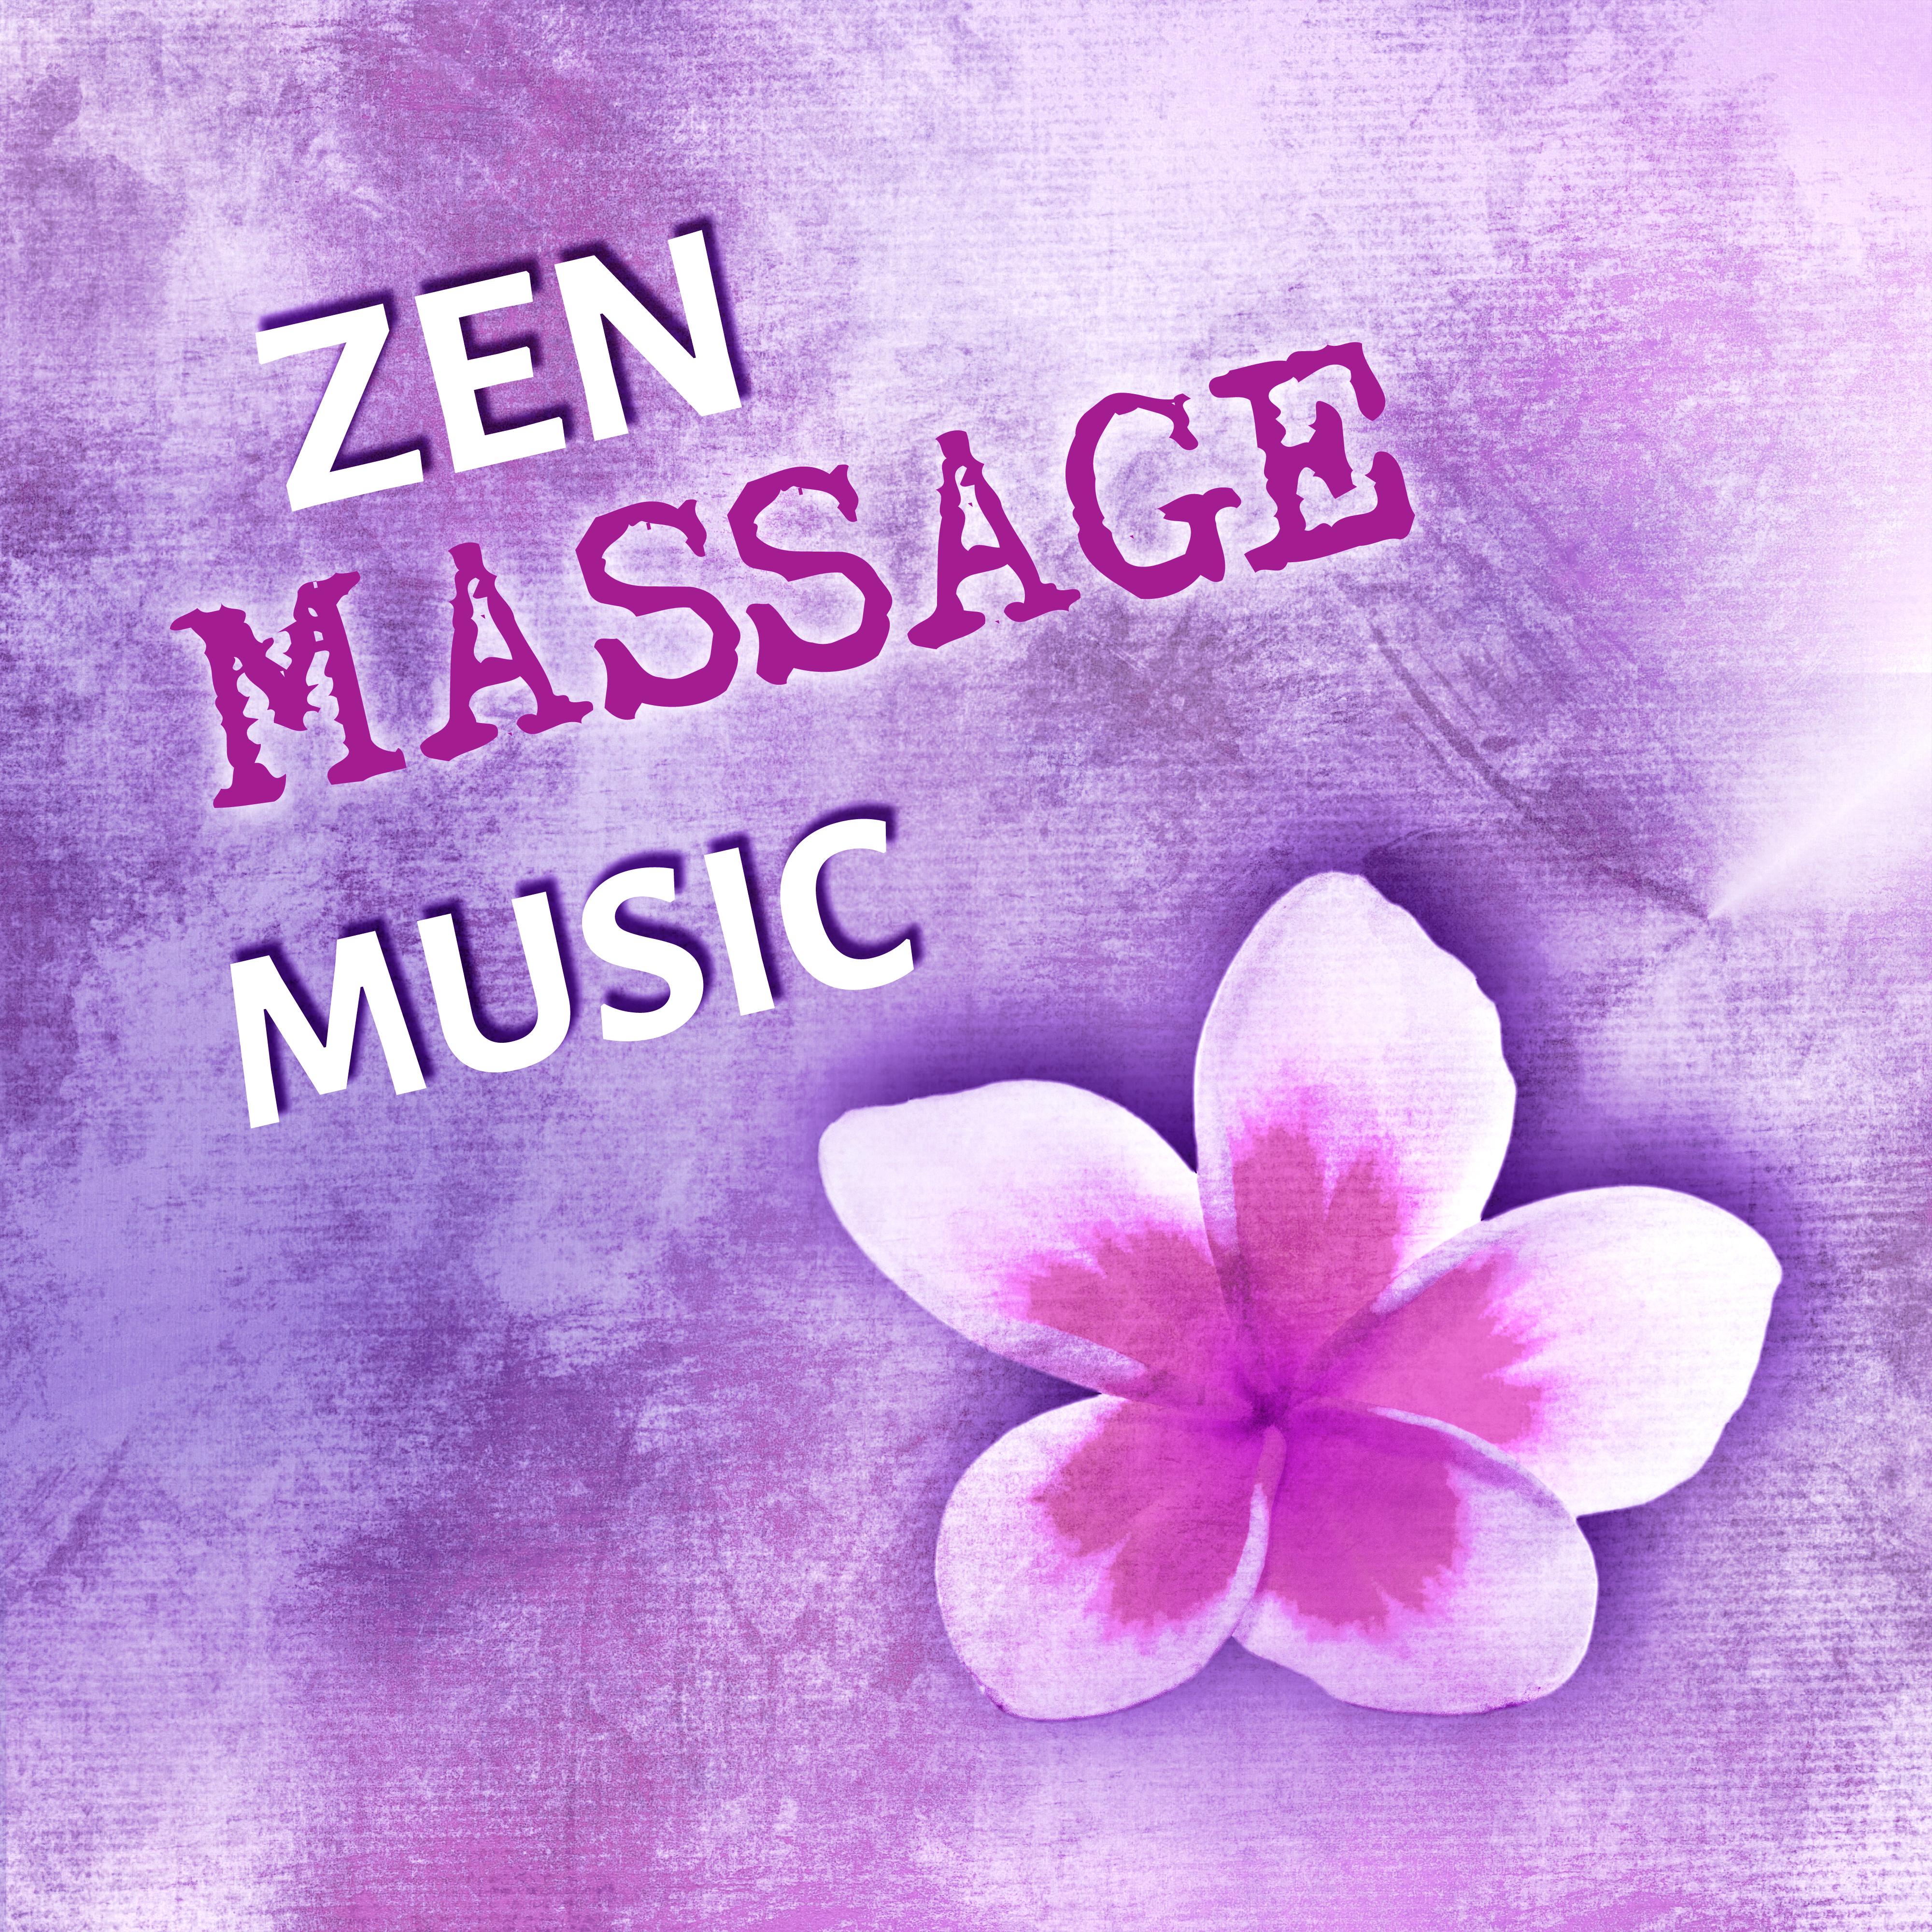 Zen Massage Music – Healing Songs, Chakra Balancing, Spirituality, Morning Prayer, Mantras, Relaxation, Pranayama, Sleep Meditation, Yoga & Wellness